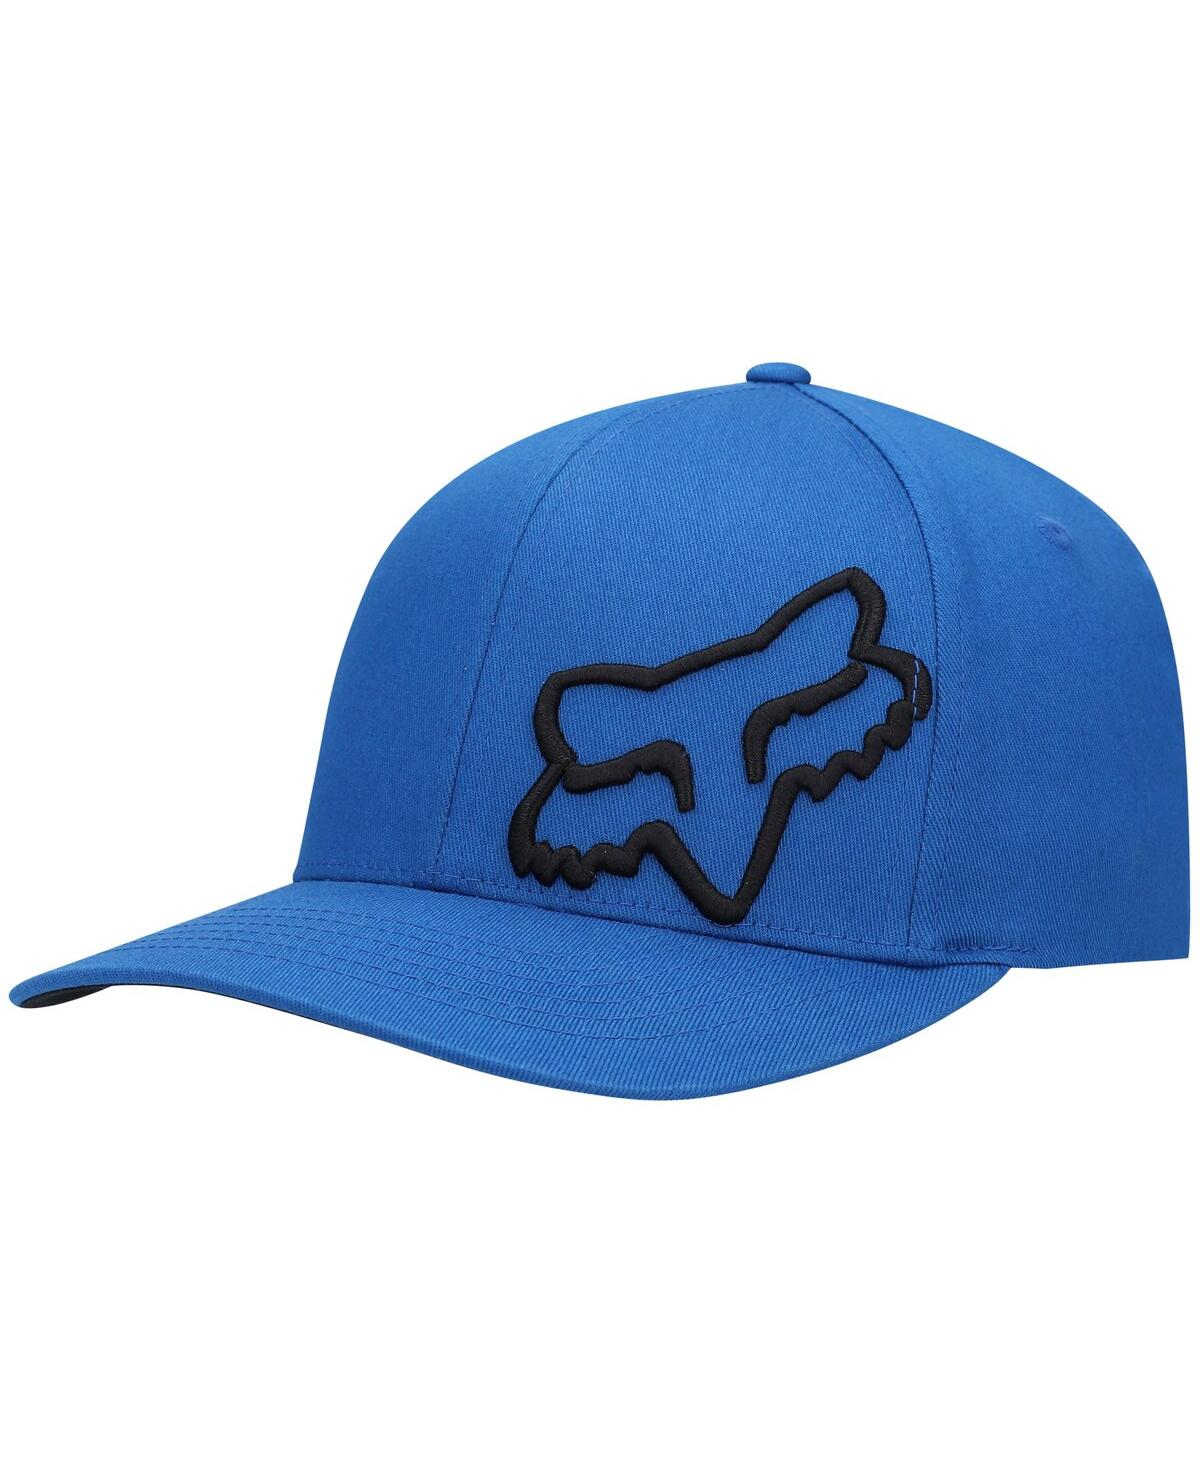 Men's Fox Blue Flex 45 Flex Hat - Blue